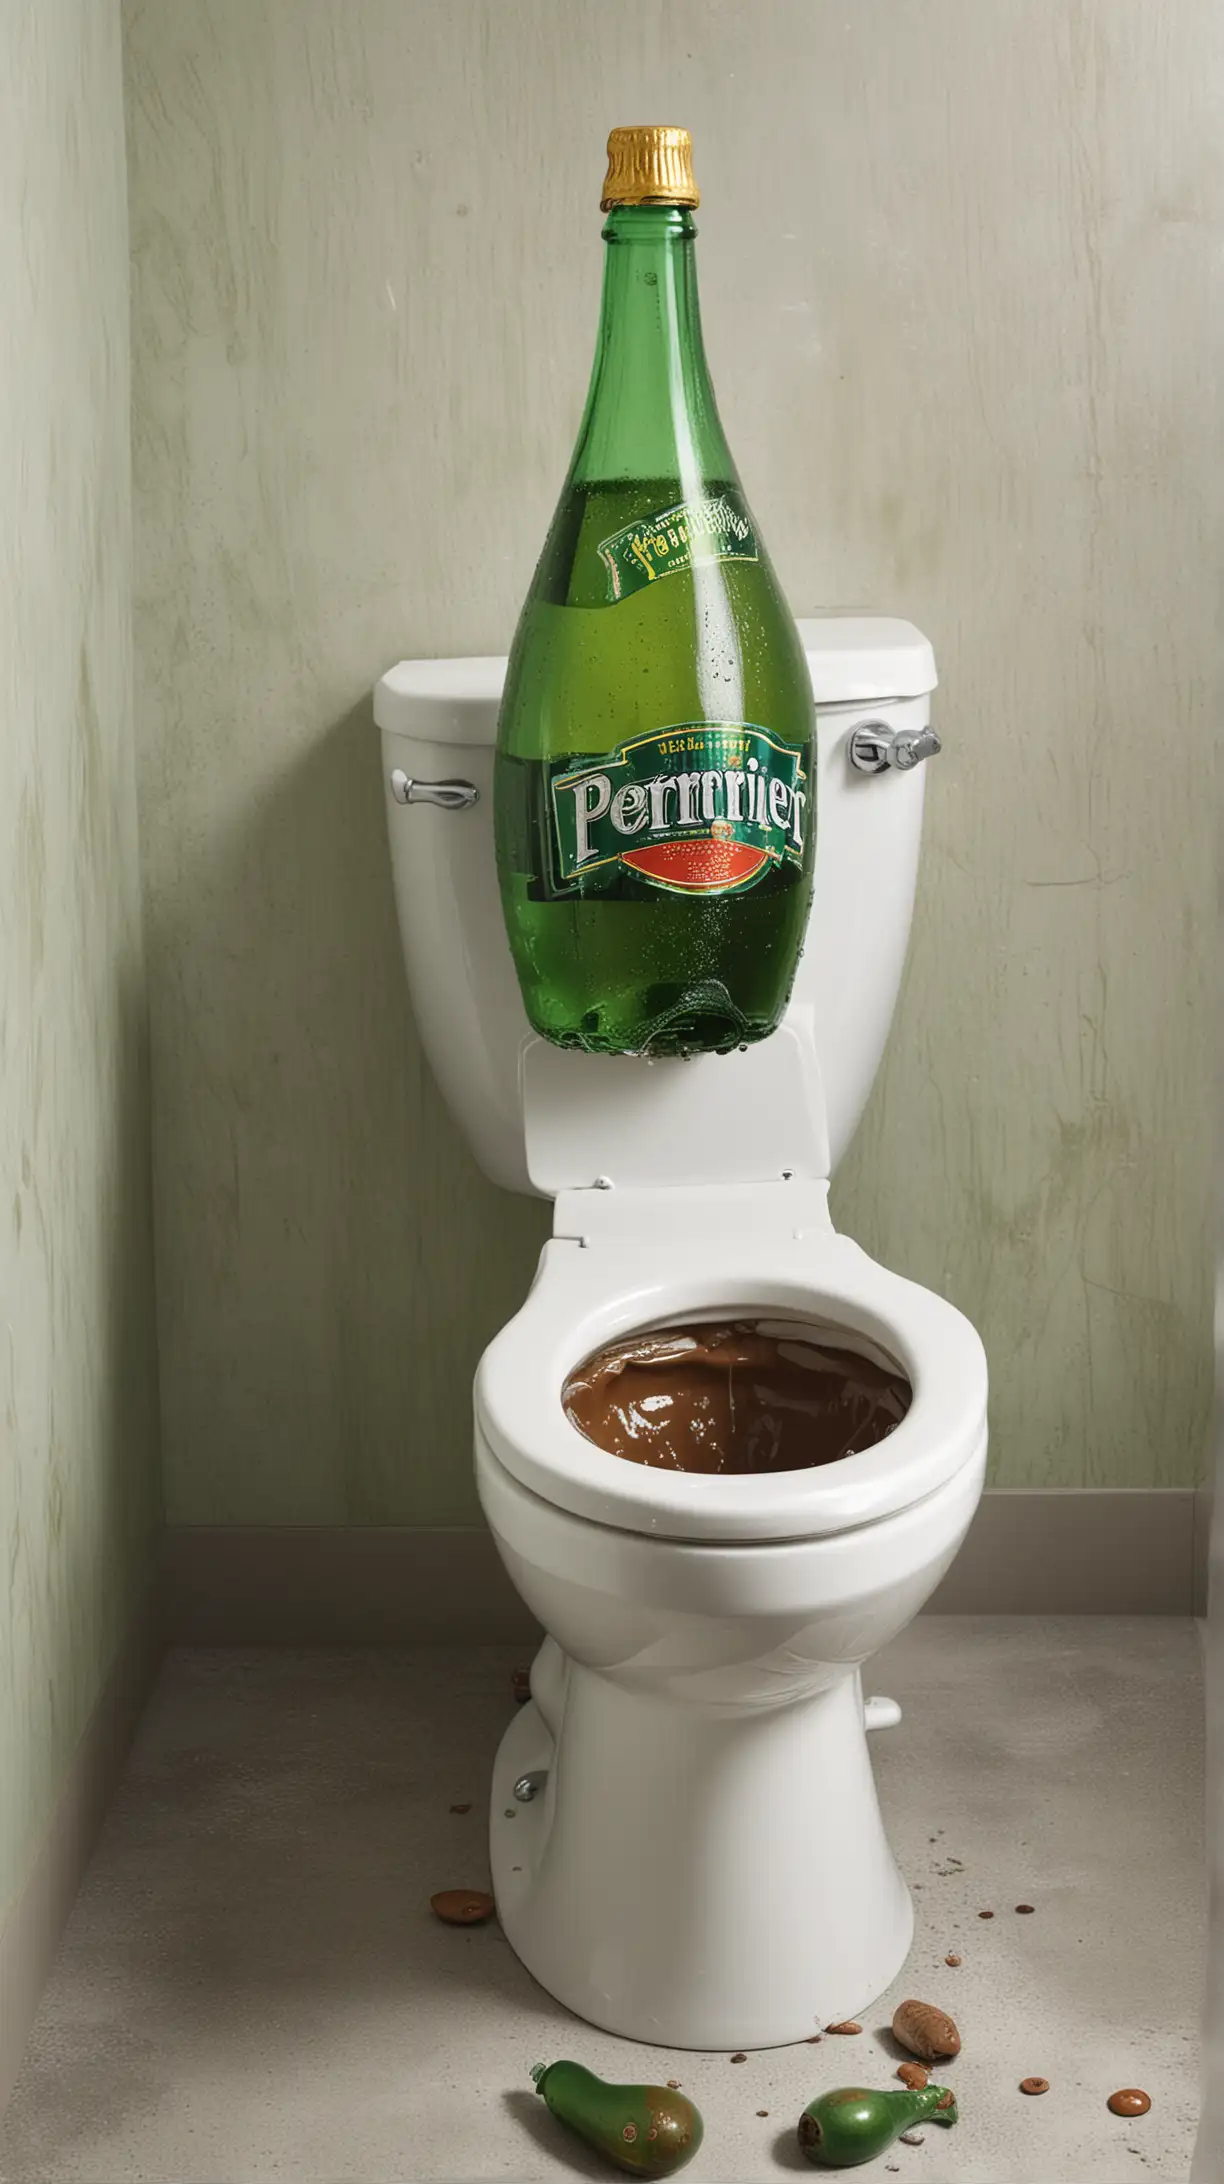 Unconventional Plumbing Giant Perrier Bottle Toilet